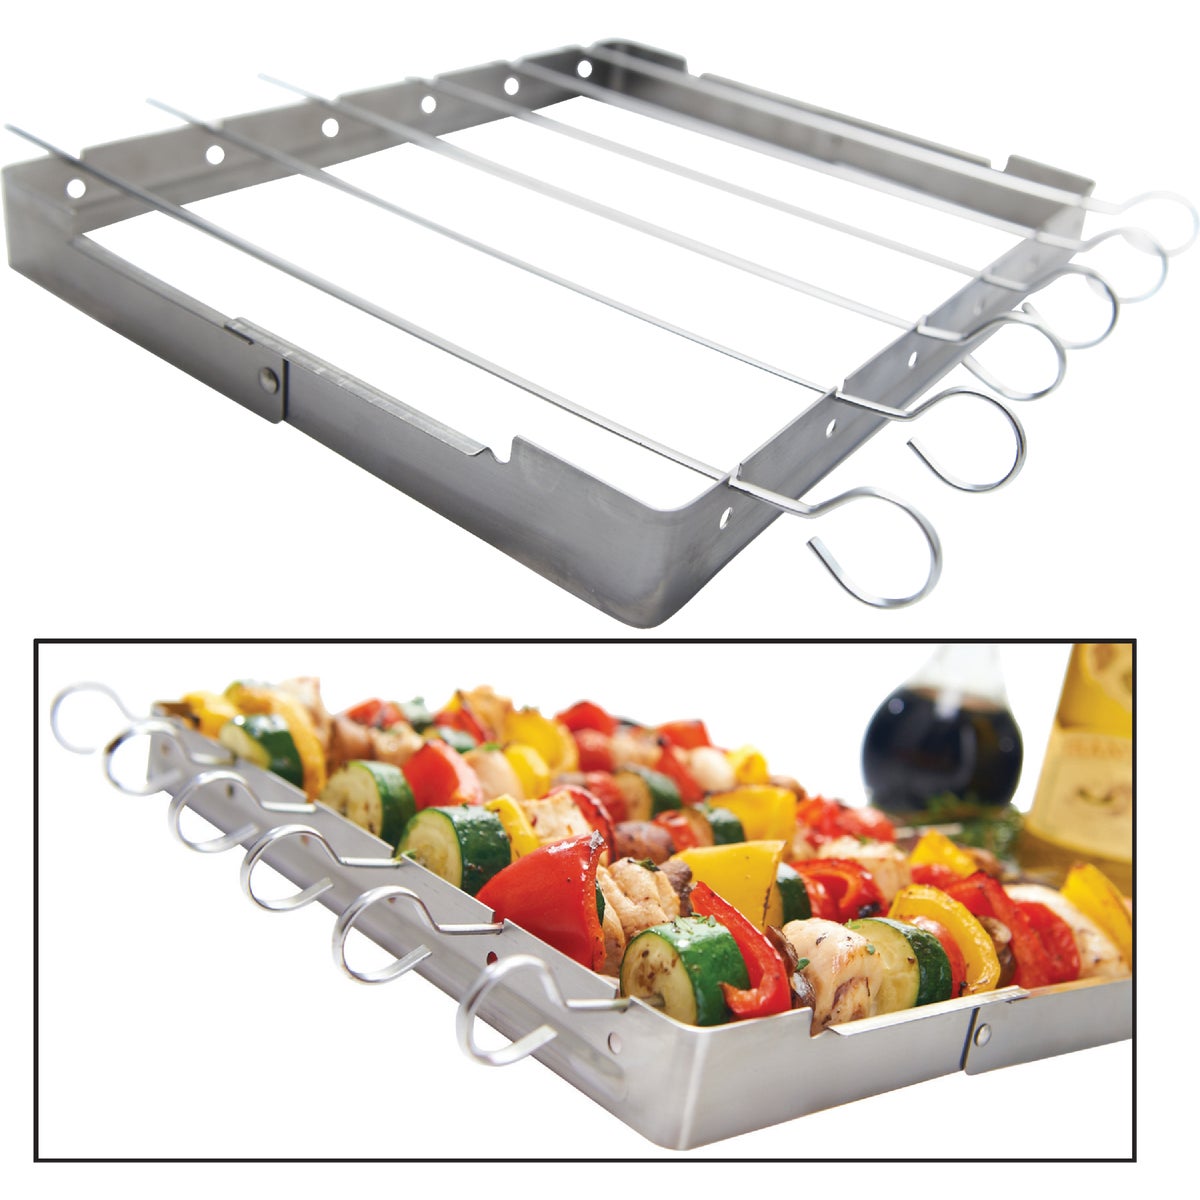 Item 800085, Folding stainless steel kebab rack (Shish Kebab set) with 6 stainless steel